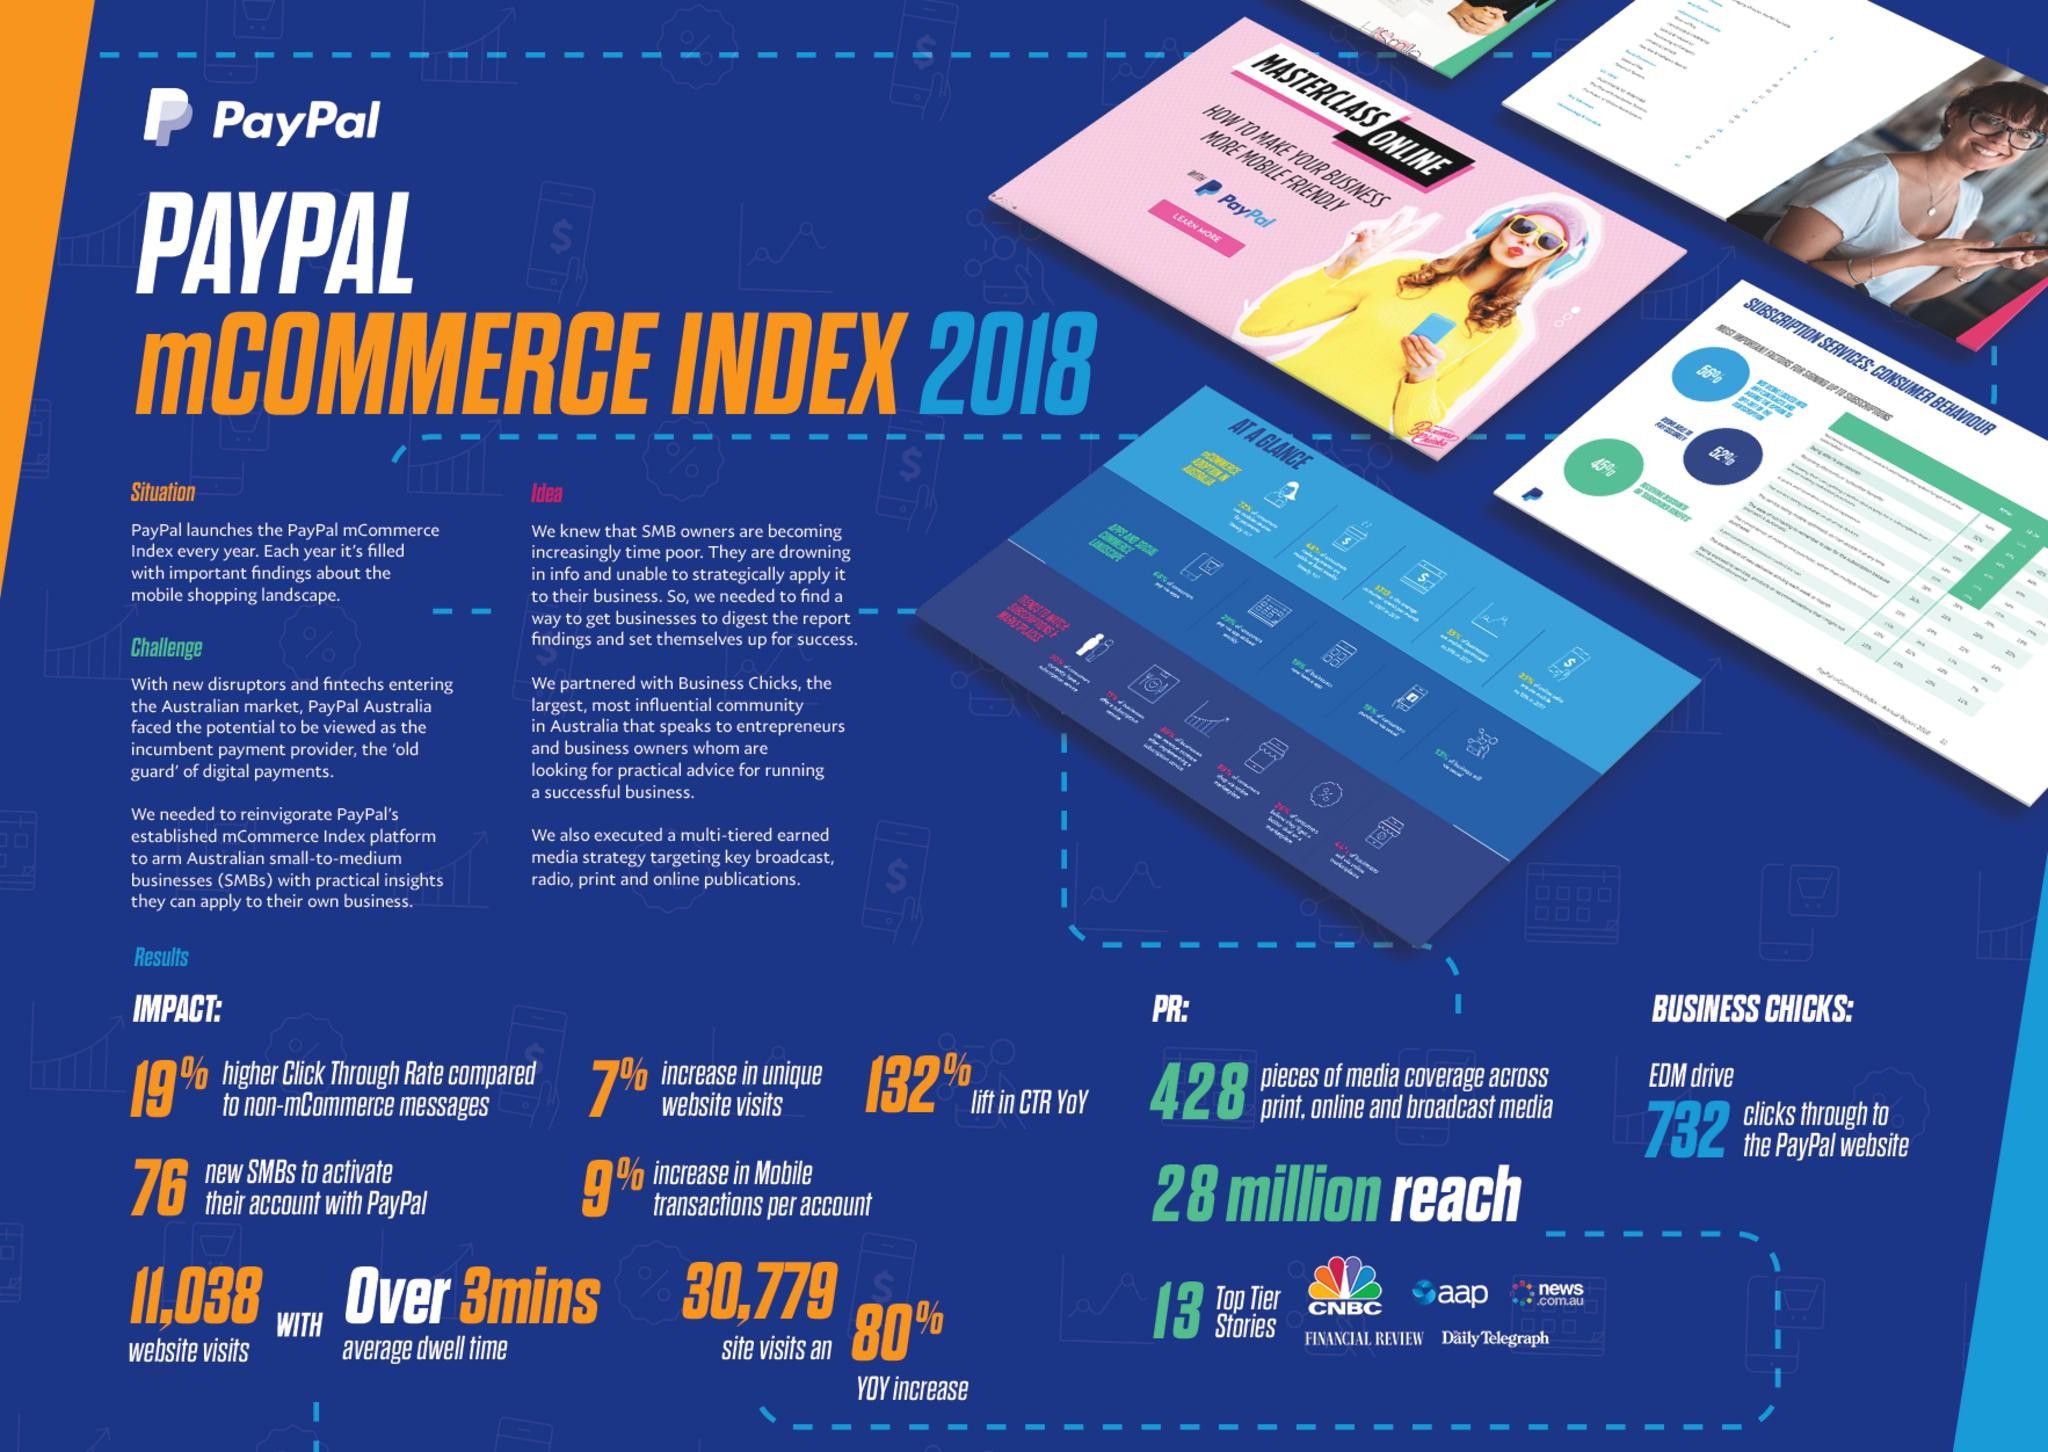 PayPal Australia’s 2018 mCommerce Index